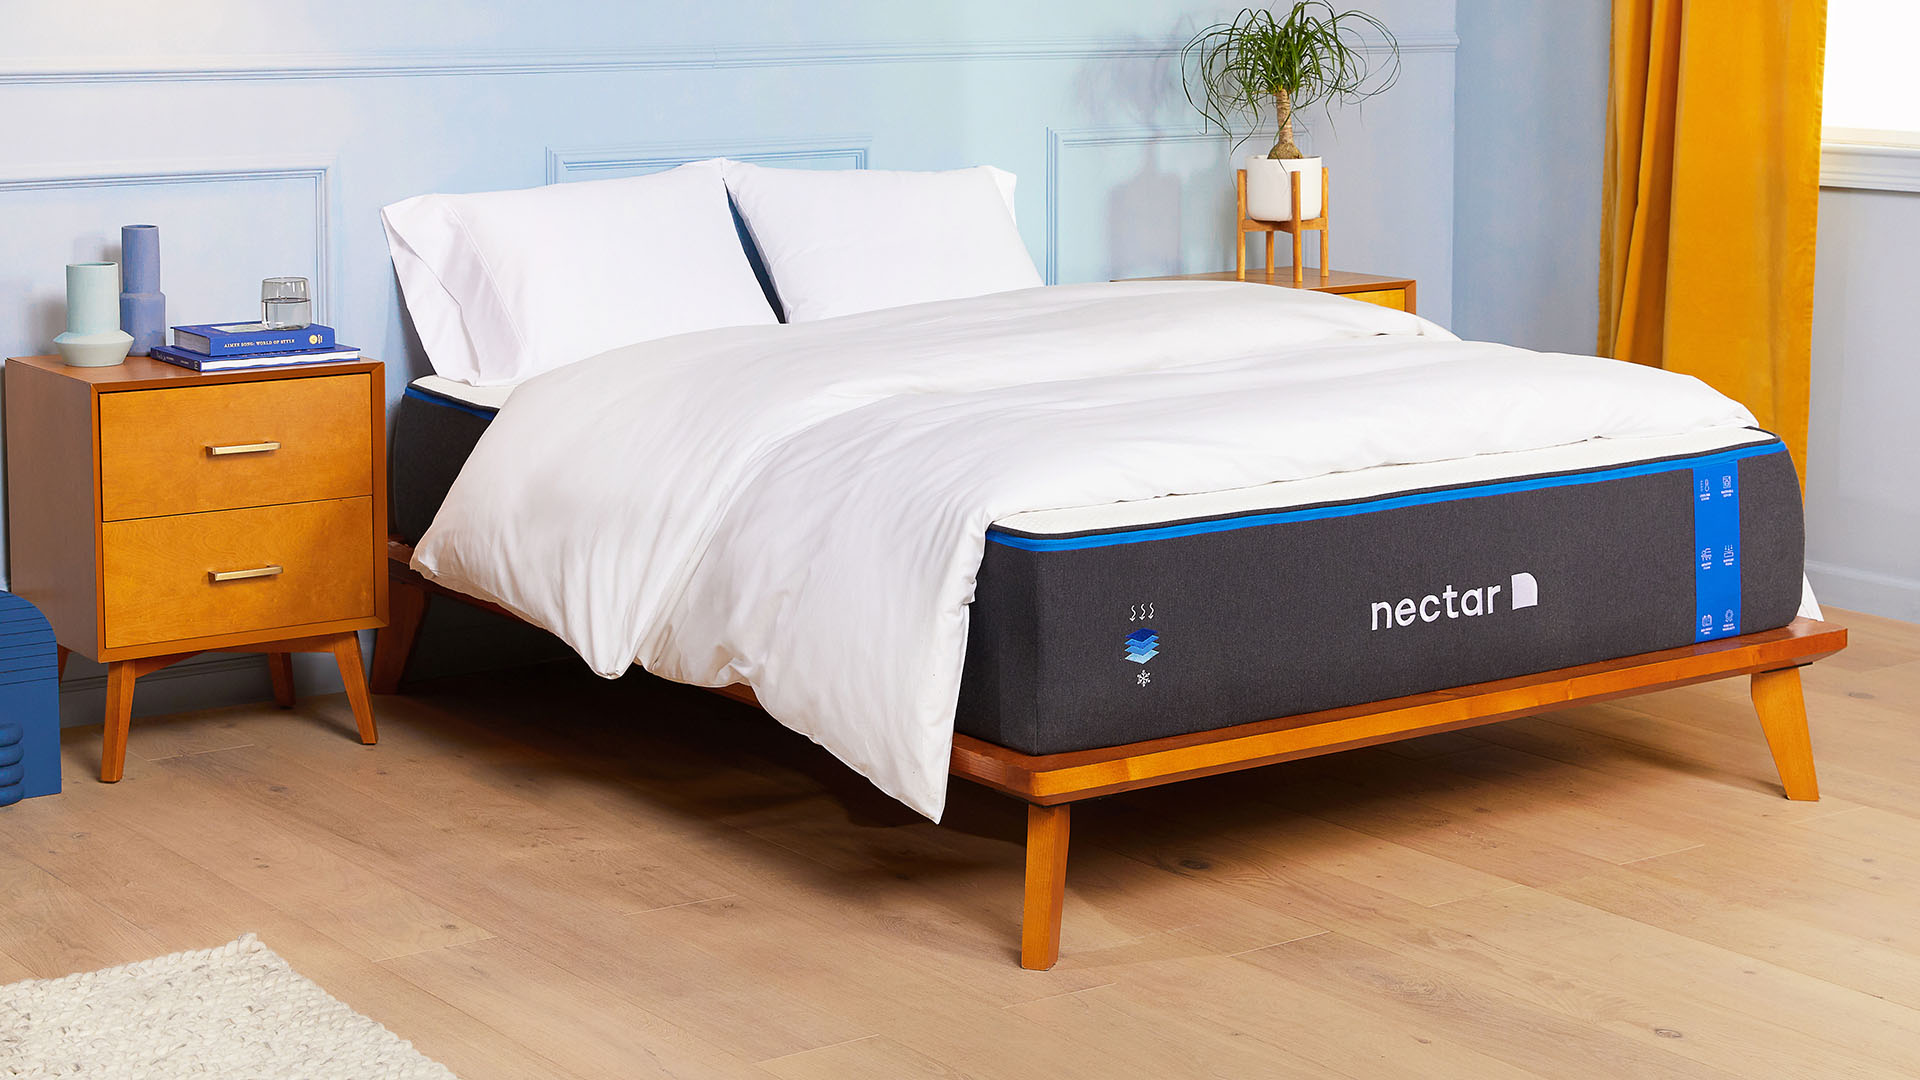 Deluxe bonded foam mattress For A Good Night's Sleep 